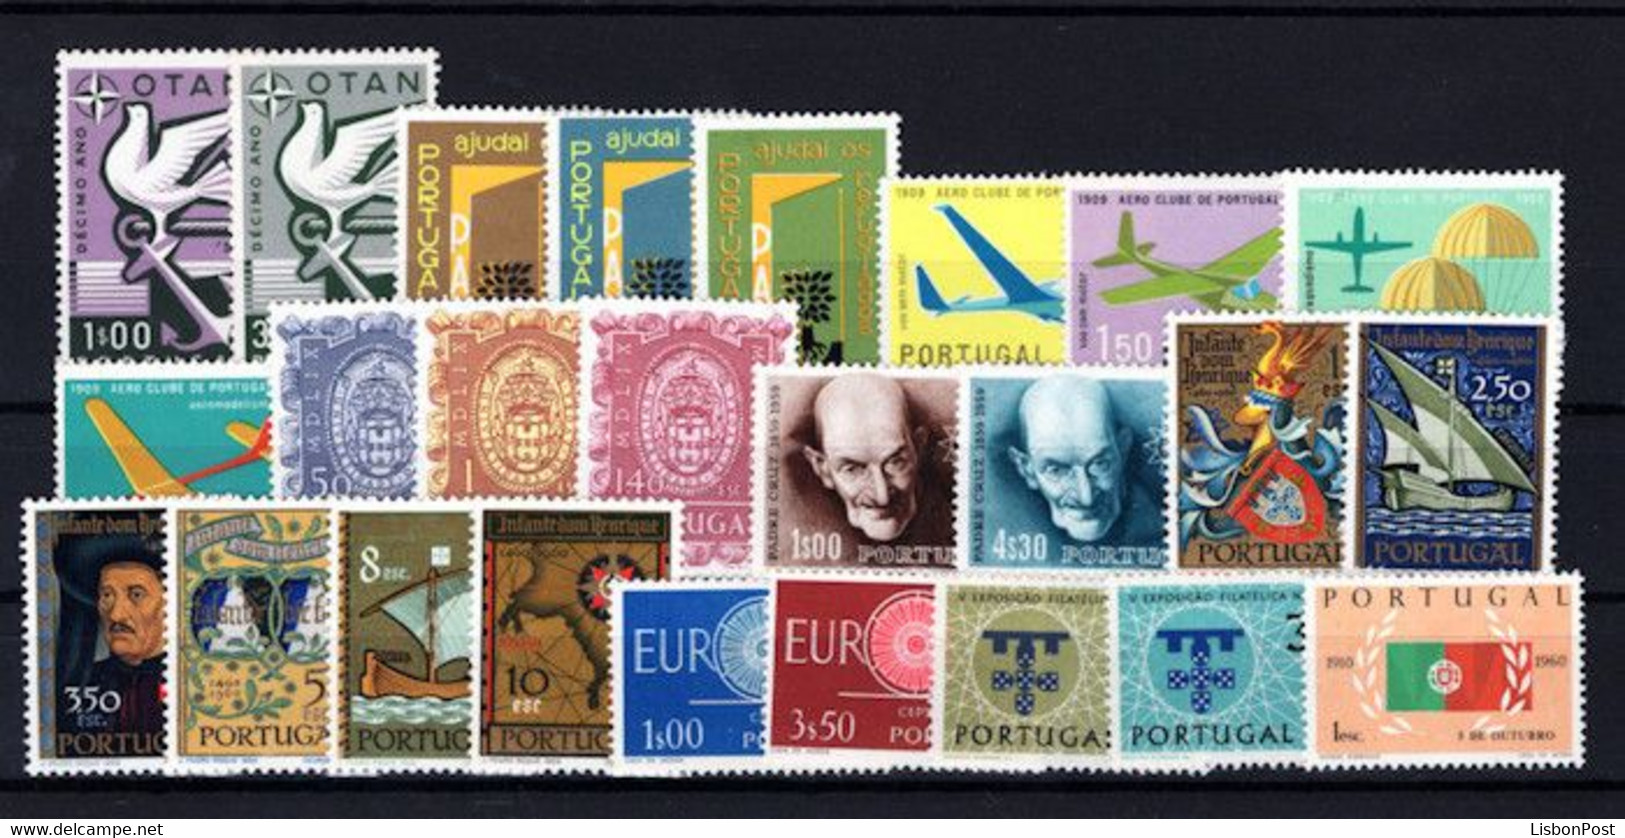 1960 Portugal Azores Madeira Complete Year MNH Stamps. Année Compléte NeufSansCharnière. Ano Completo Novo Sem Charneira - Années Complètes